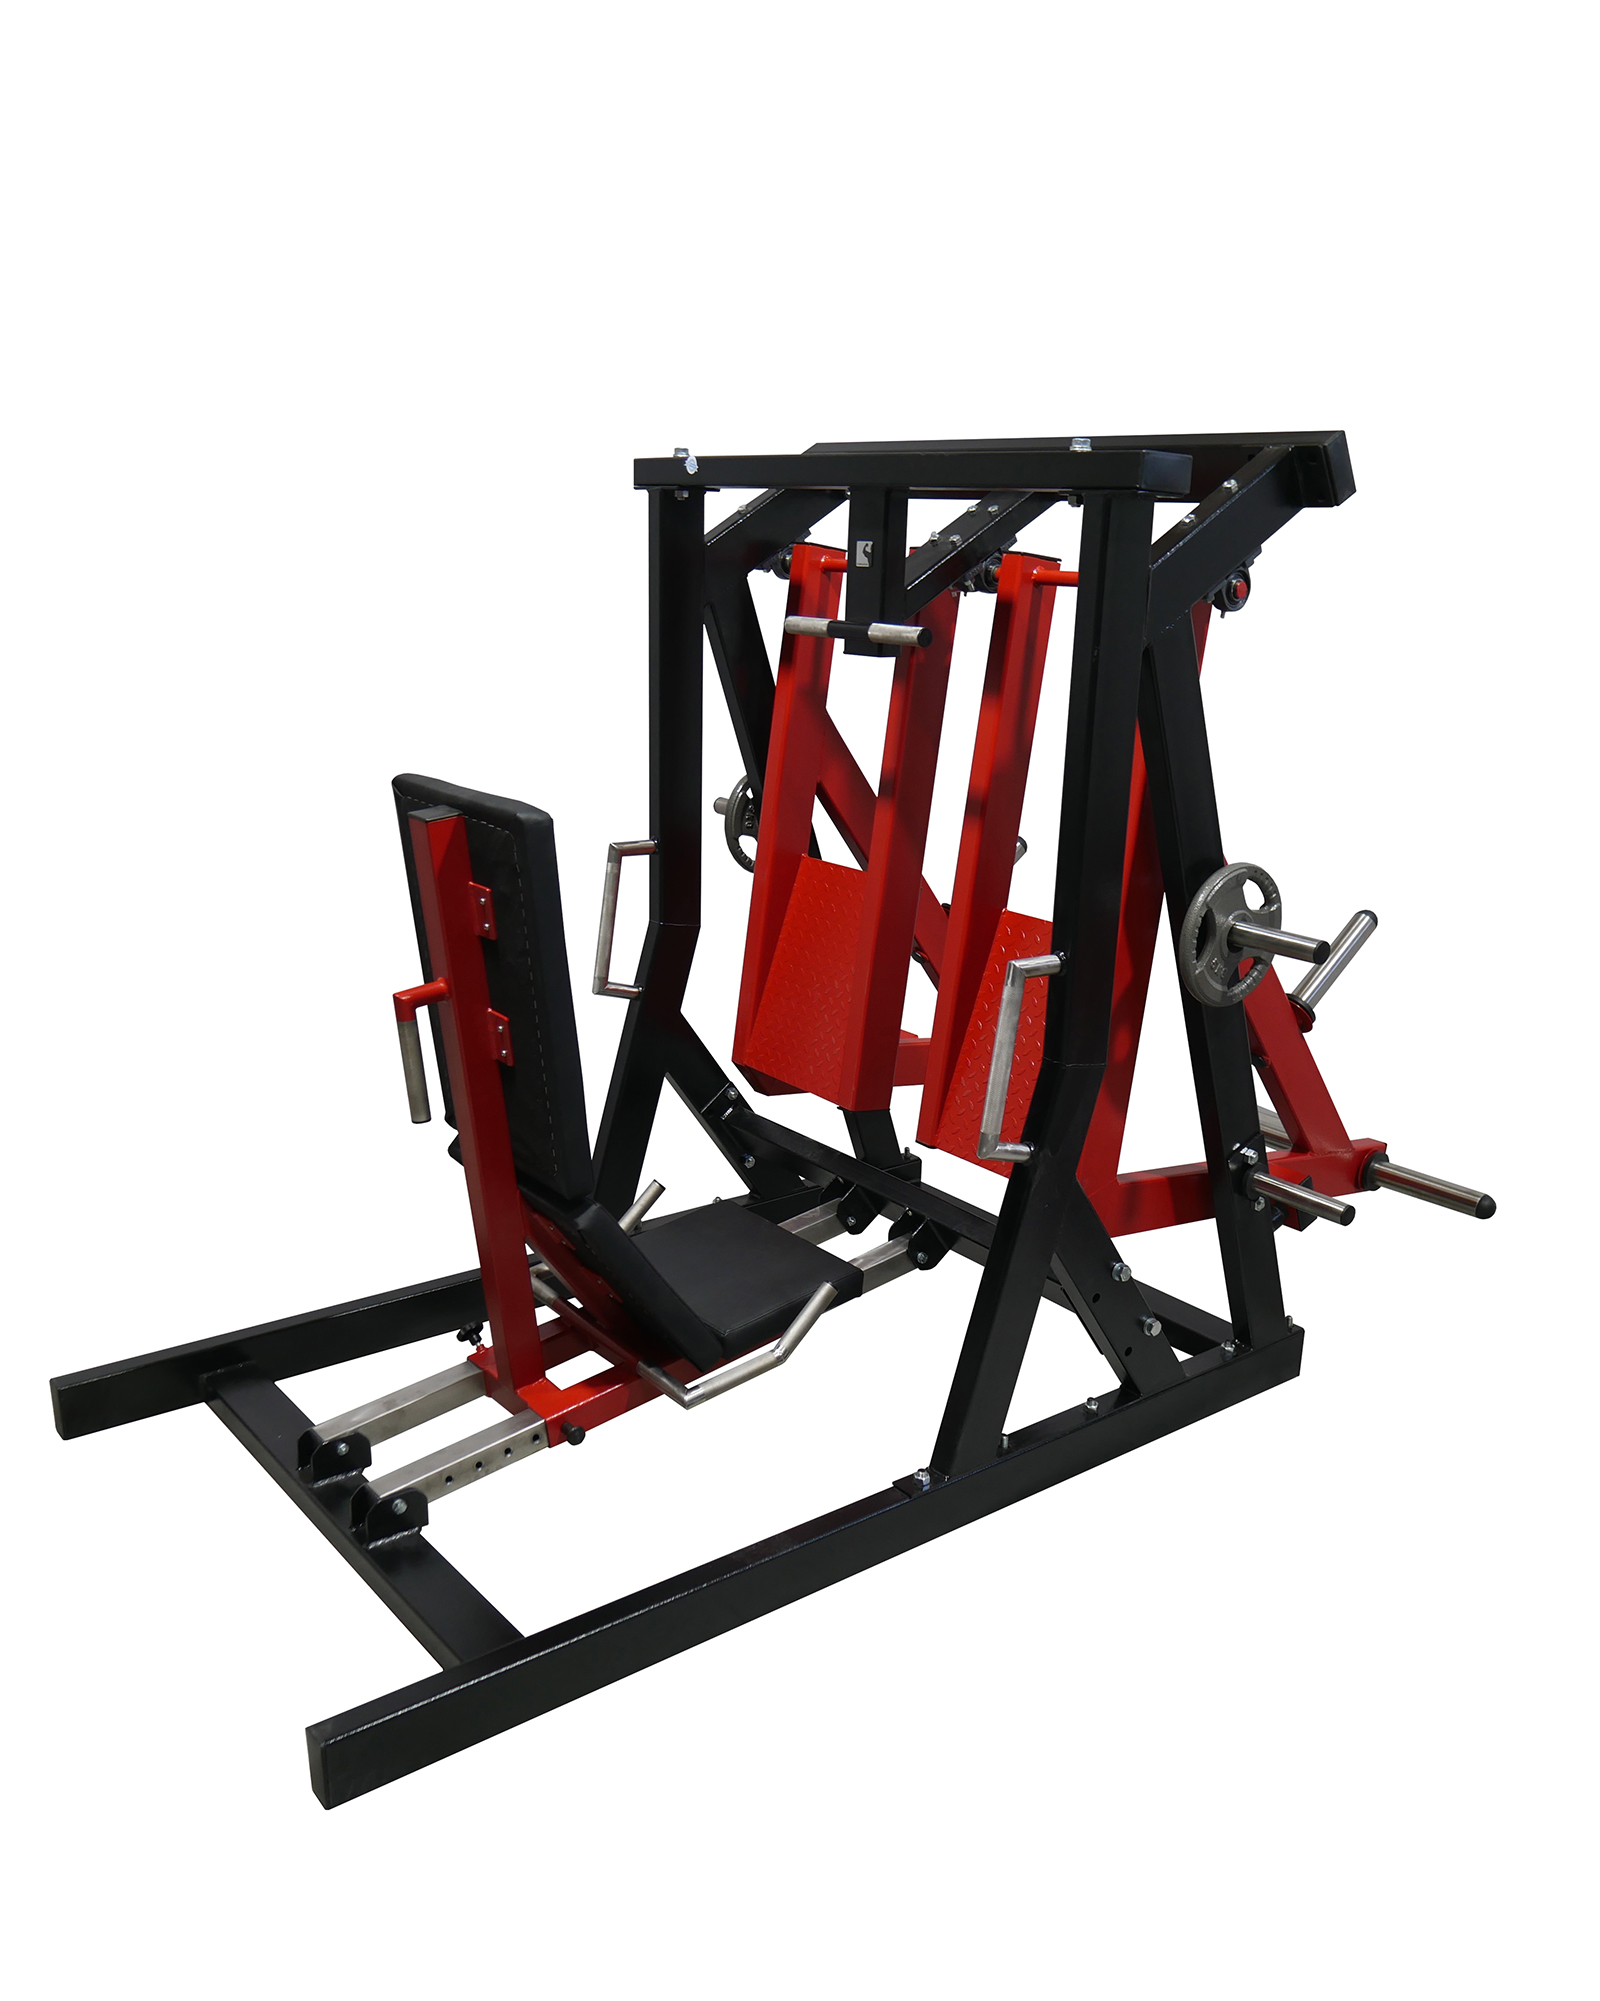 D4 Horizontal Leg Press Machine  Gym Steel - Professional Gym Equipment